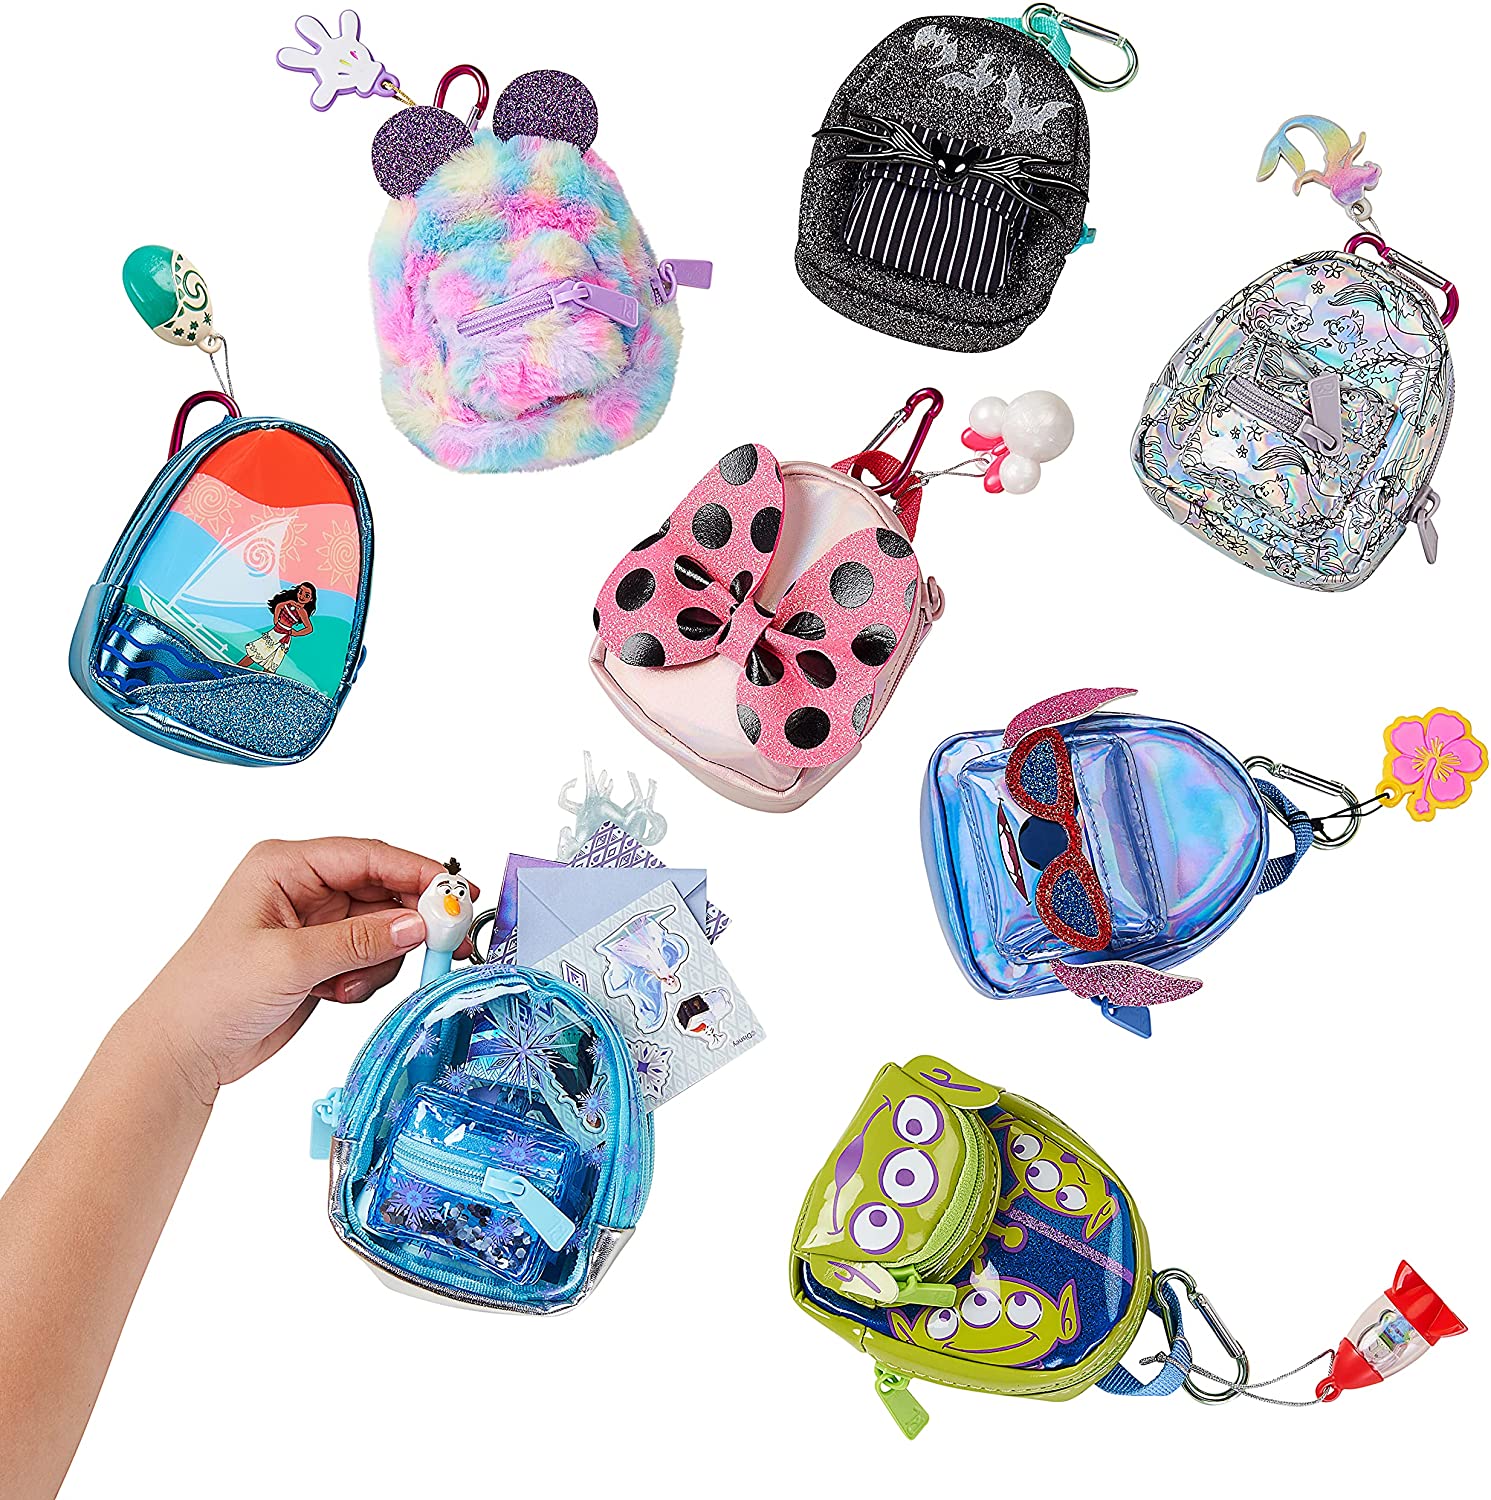 Real Littles Disney Locker and Backpack